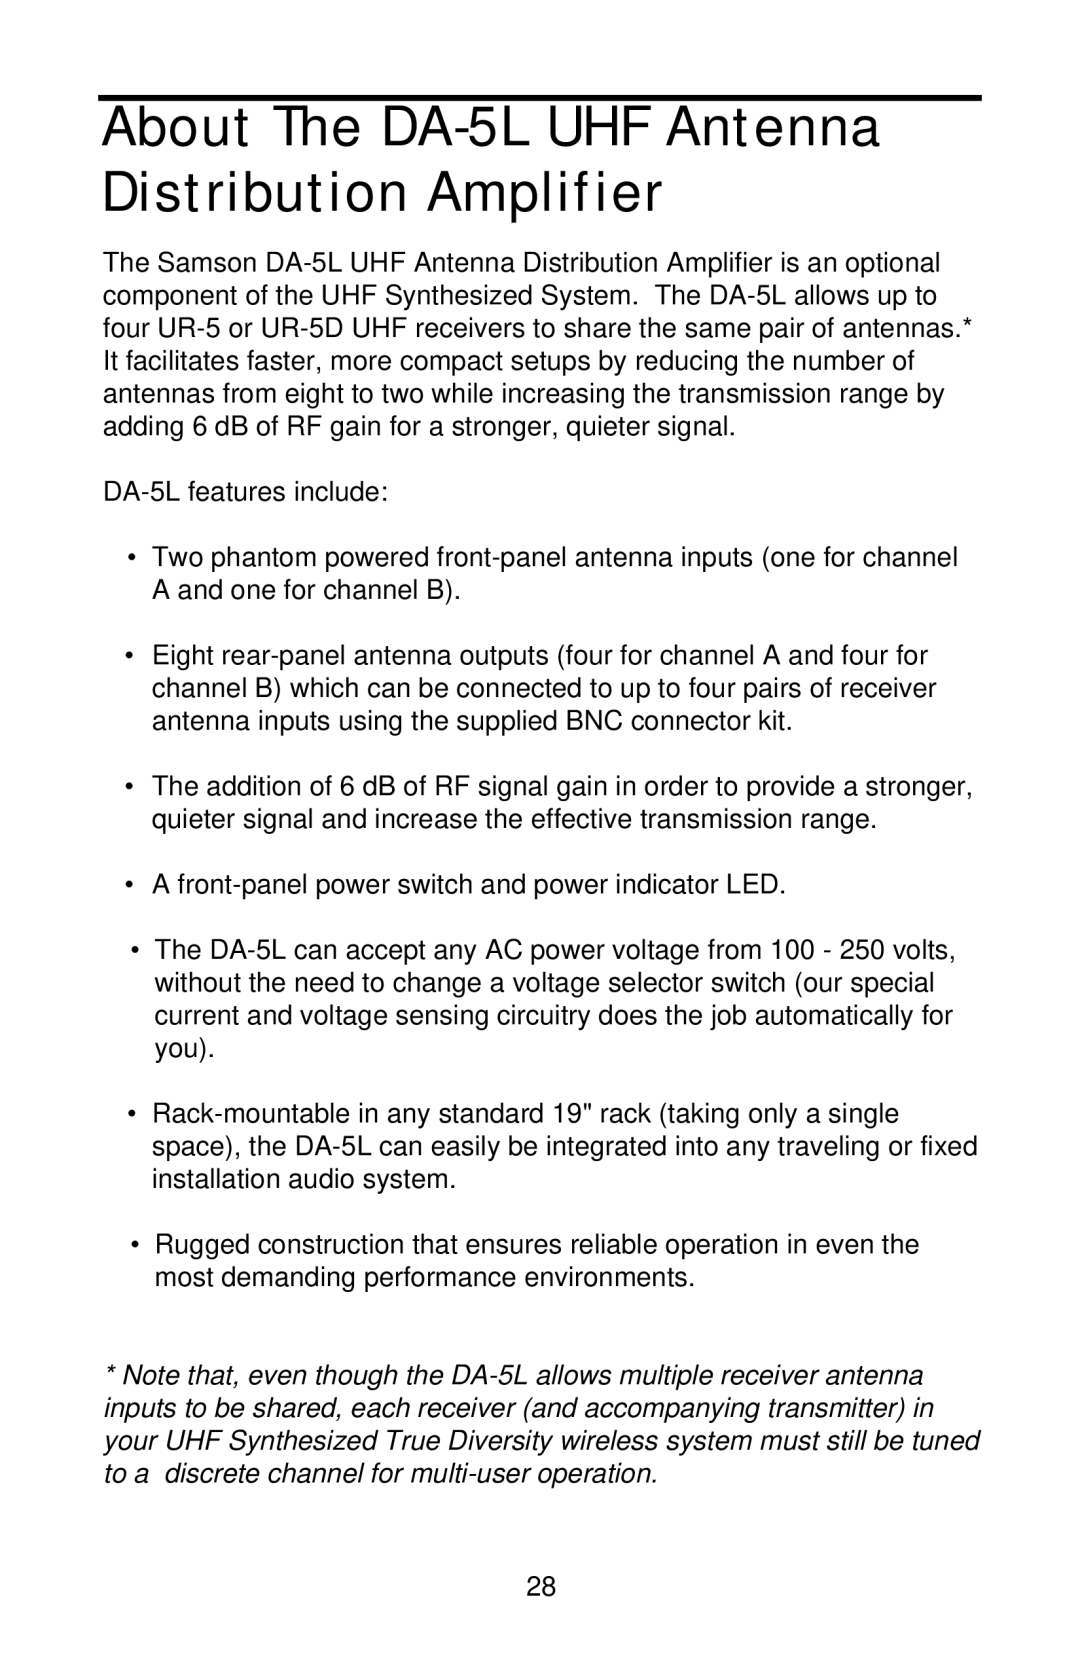 Samson UT-5, UR-5D, UH-5 manual About The DA-5LUHF Antenna Distribution Amplifier 